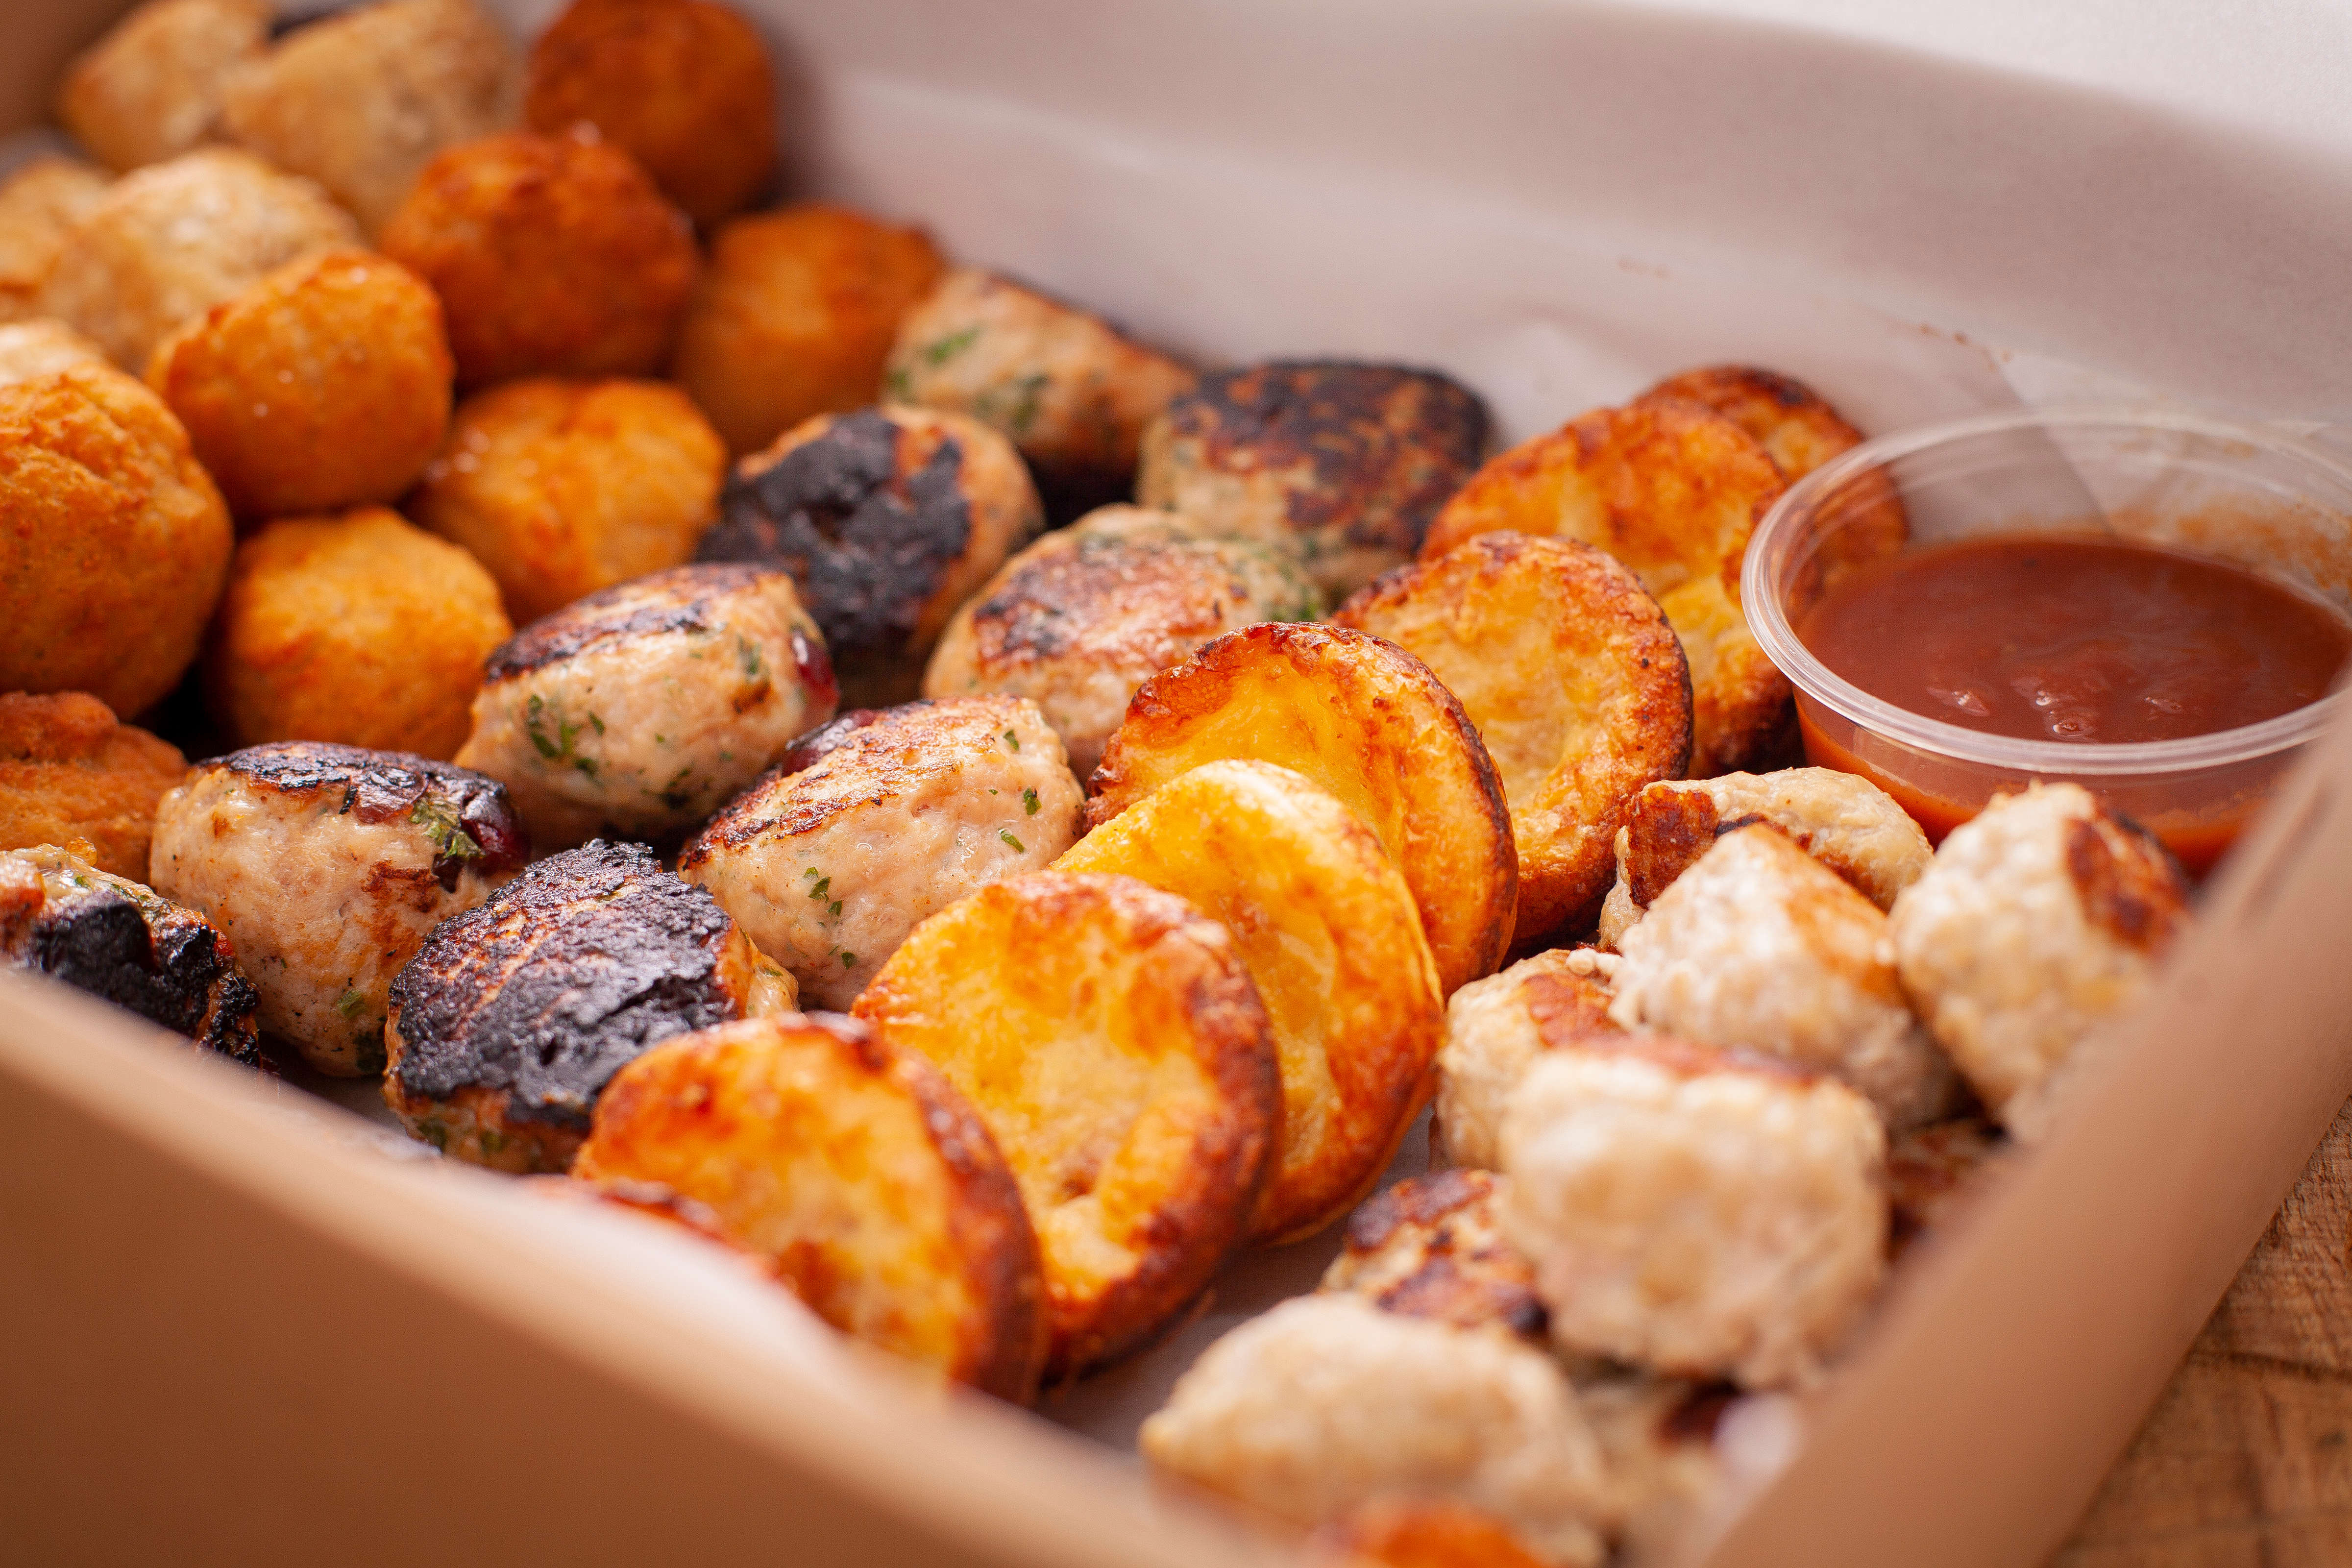 Hot savoury box containing 50 items – sausage rolls, chicken balls, smoked salmon arancini, bacon and cheese tartlets, meatballs. Photo: Richard Jupe.